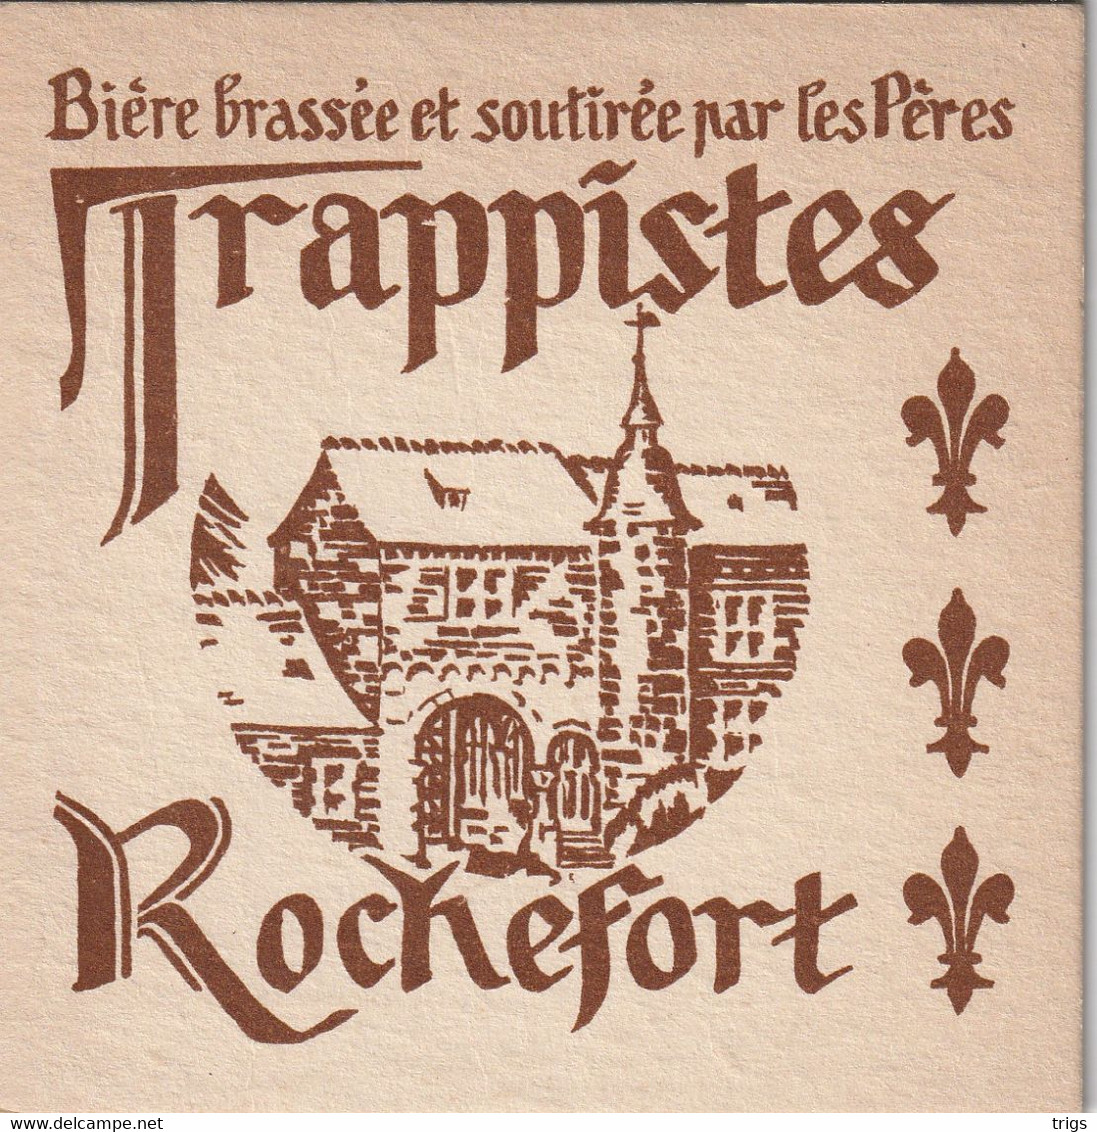 Trappistes Rochefort - Coasters